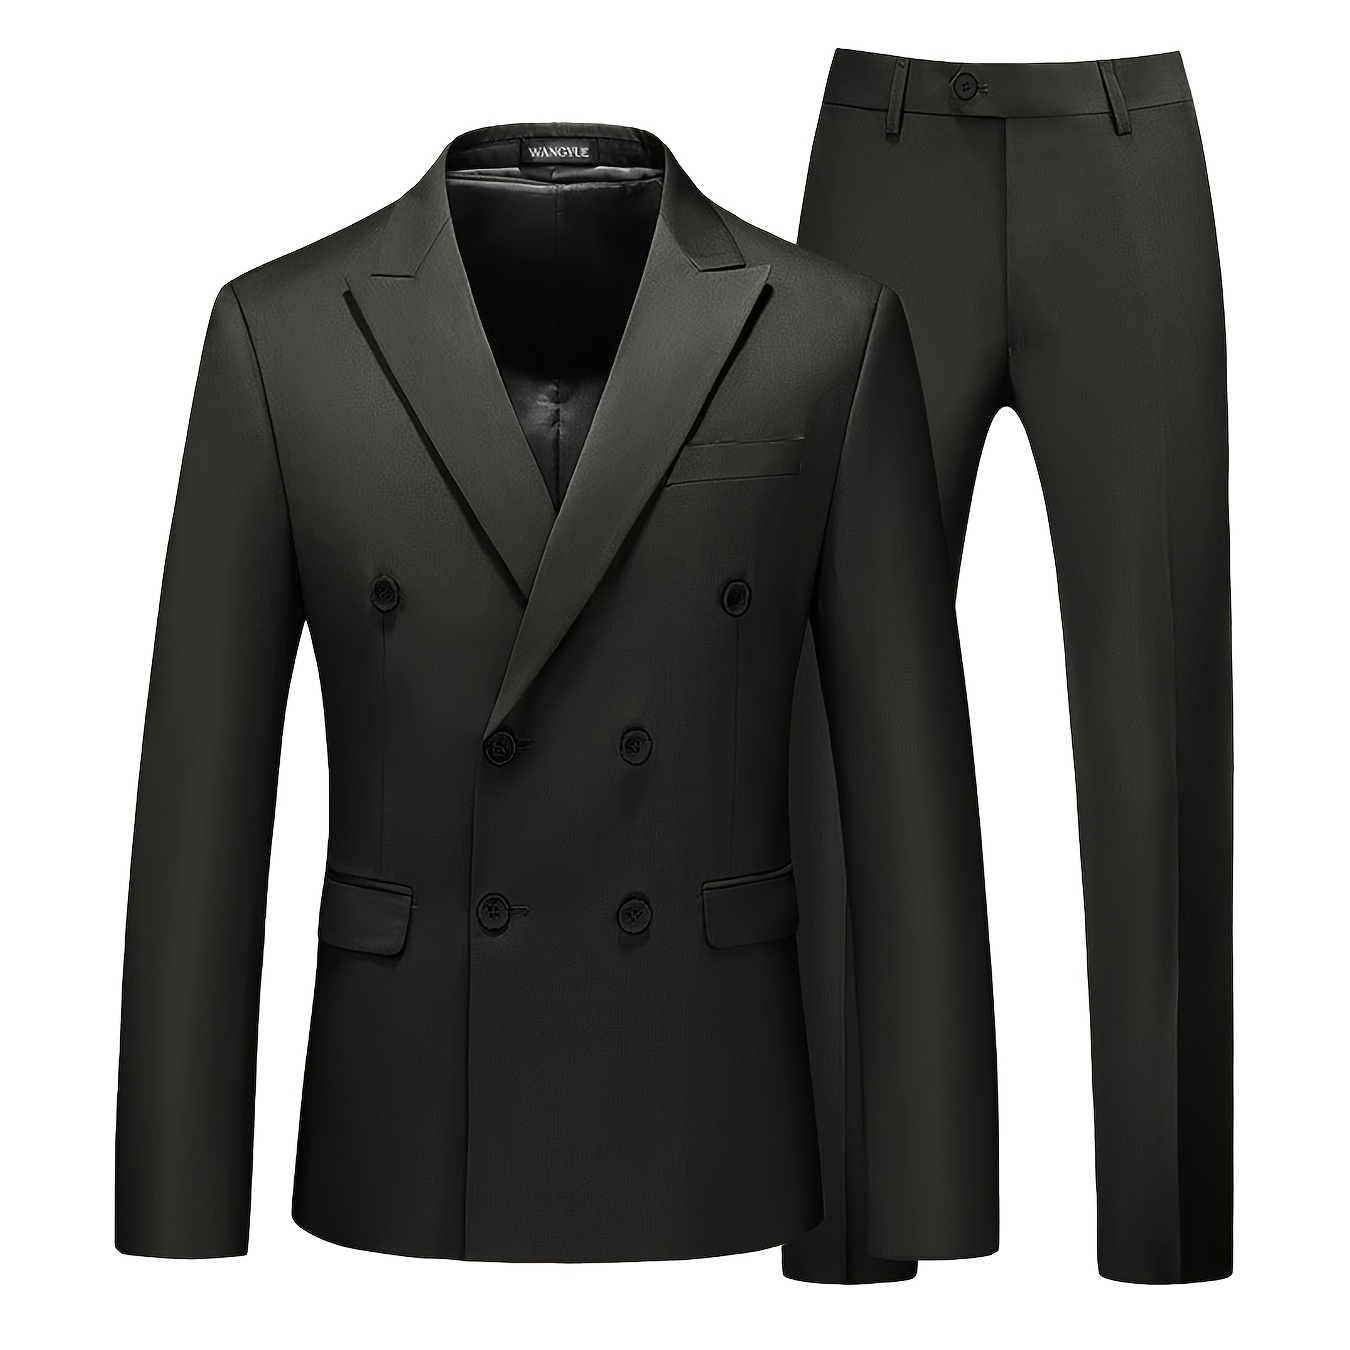 

Formal 2 Pieces Set, Men's Double Breasted Suit Jacket & Dress Pants Suit Set For Business Dinner Wedding Party